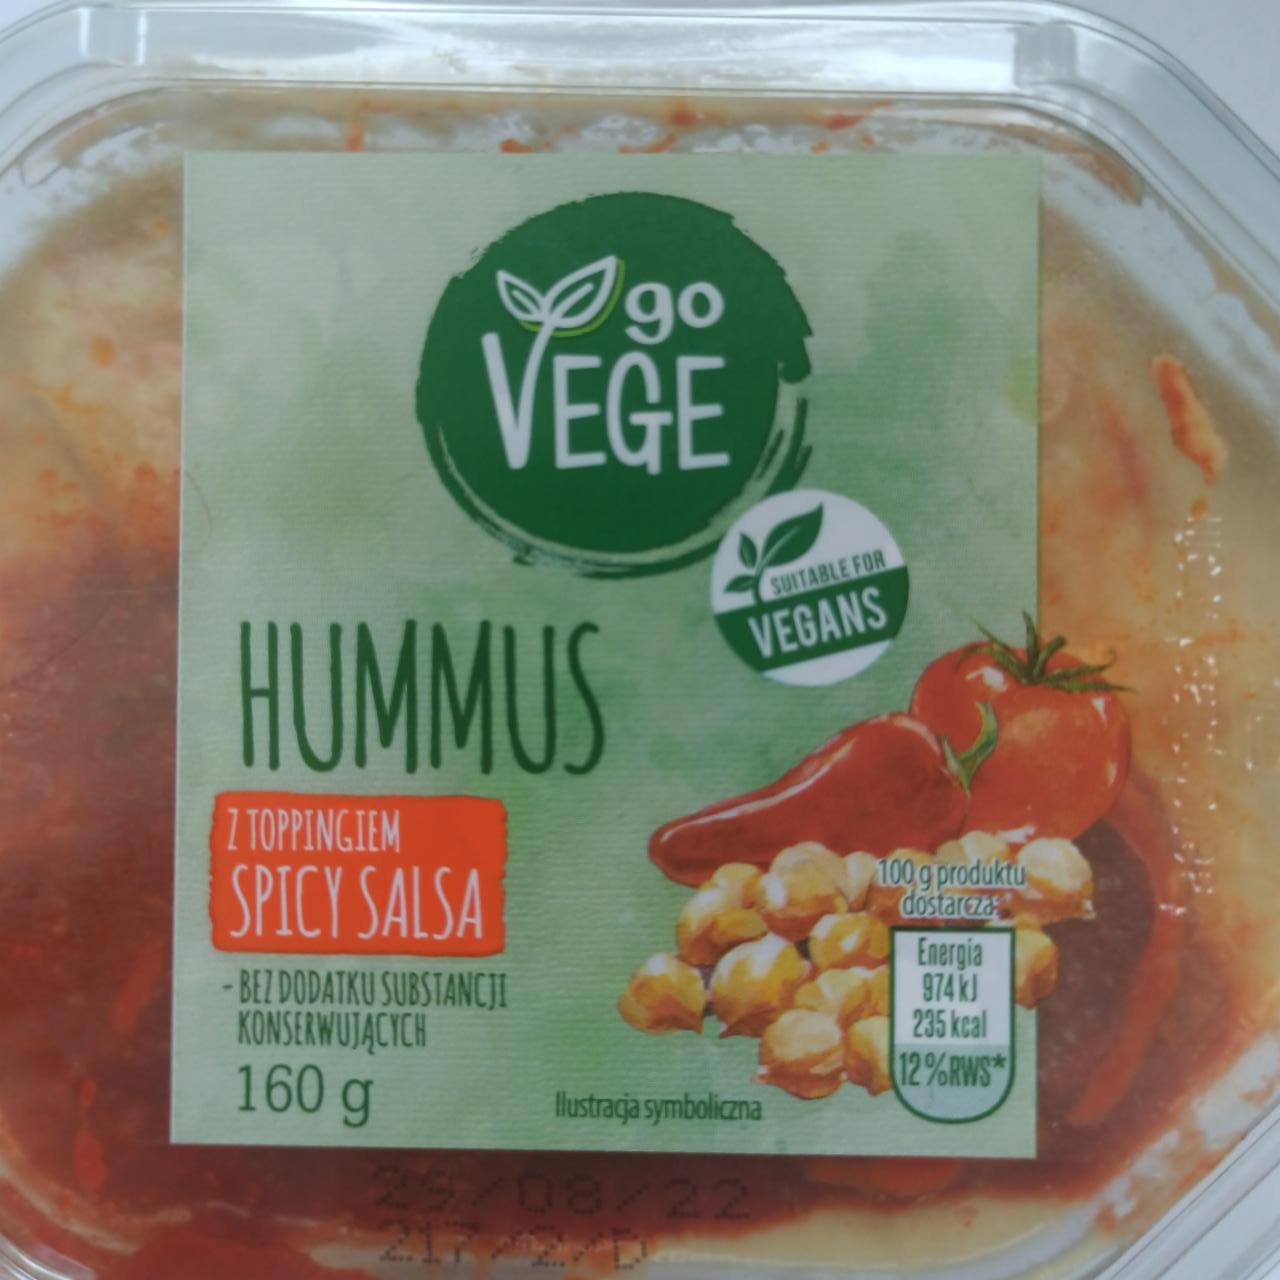 Фото - Hummus z toppingiem spicy salsa Go vege